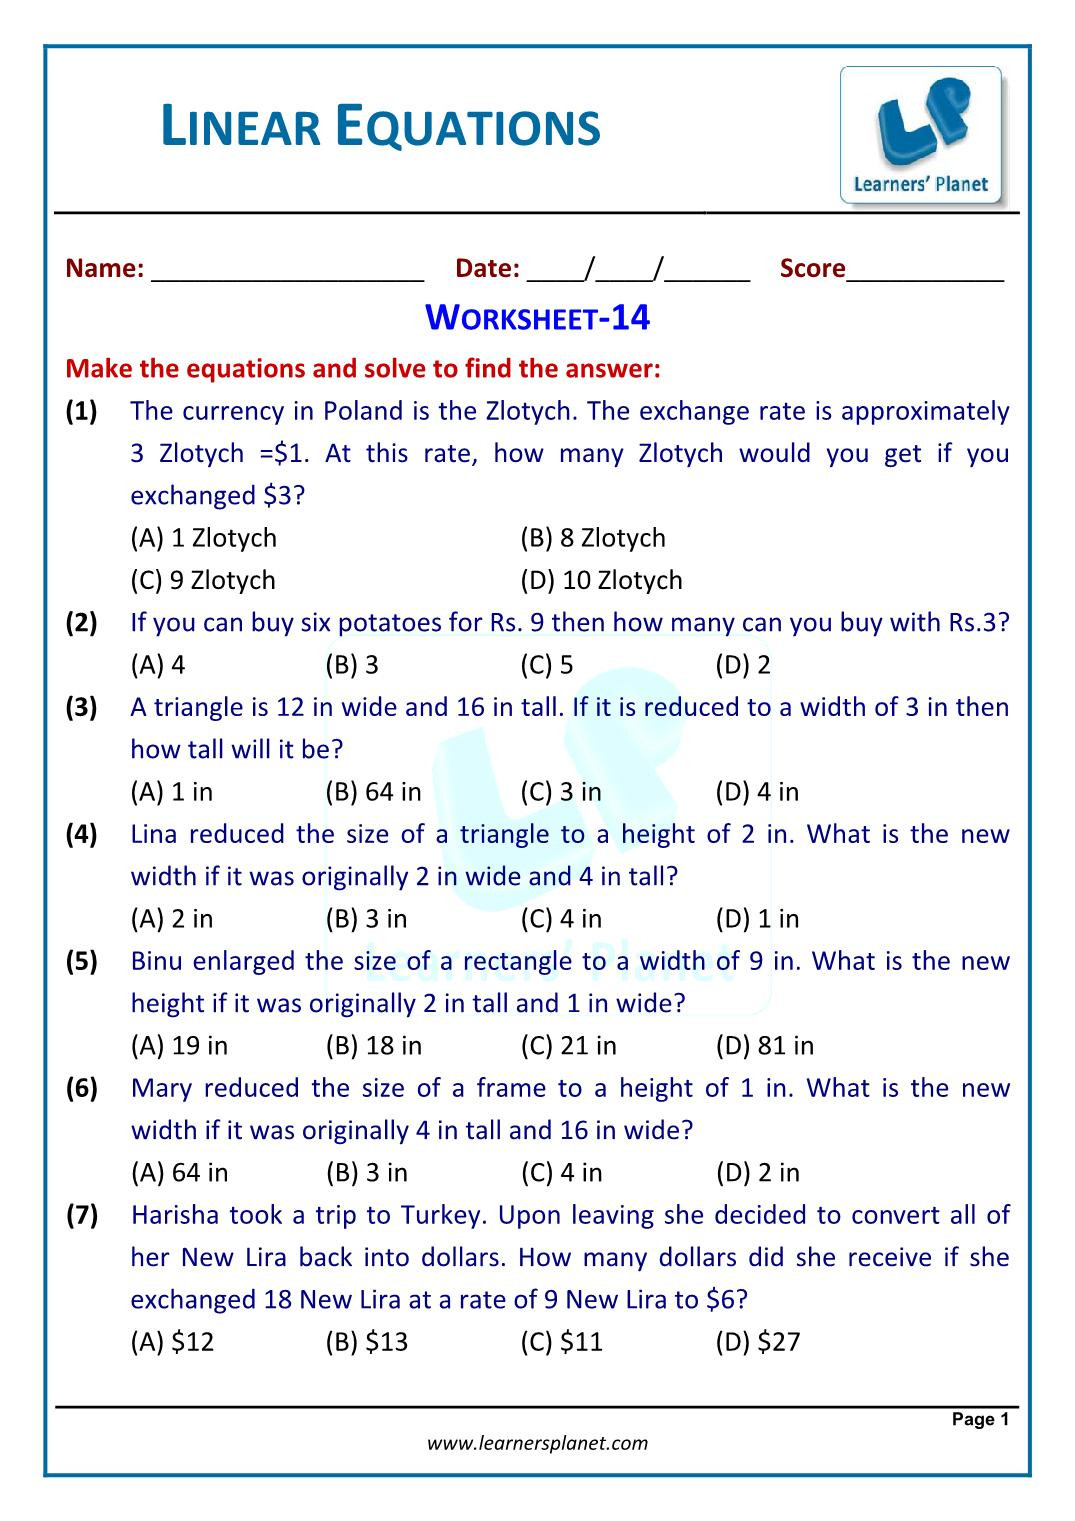 Linear Word Problems Worksheet Cbse Class Viii Mathematics Linear Equations Worksheets